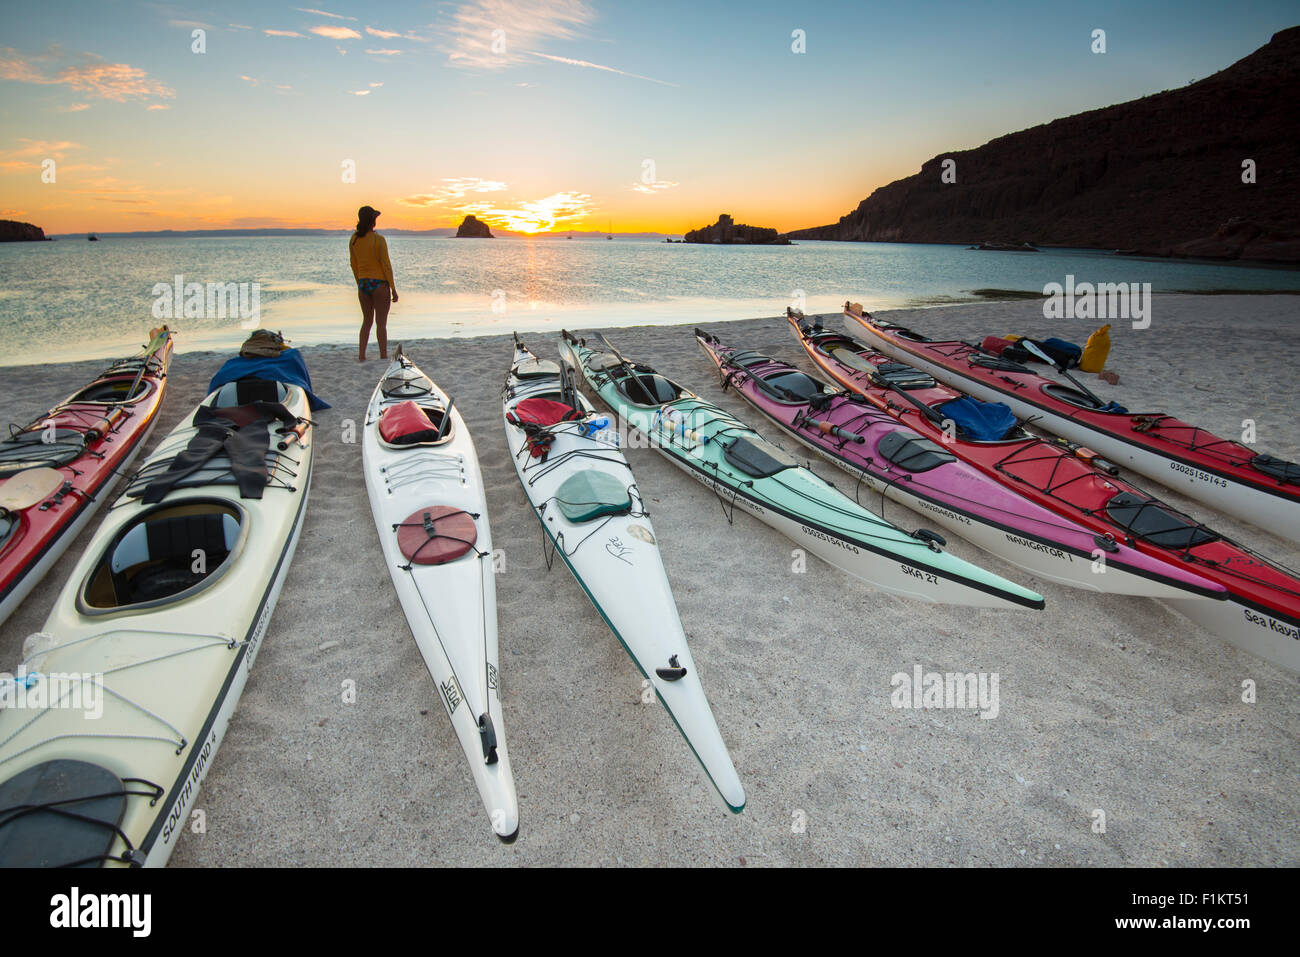 Mexico, Baja, Lapaz, Espiritu Santo. Woman standing near kayaks during sunset. Stock Photo